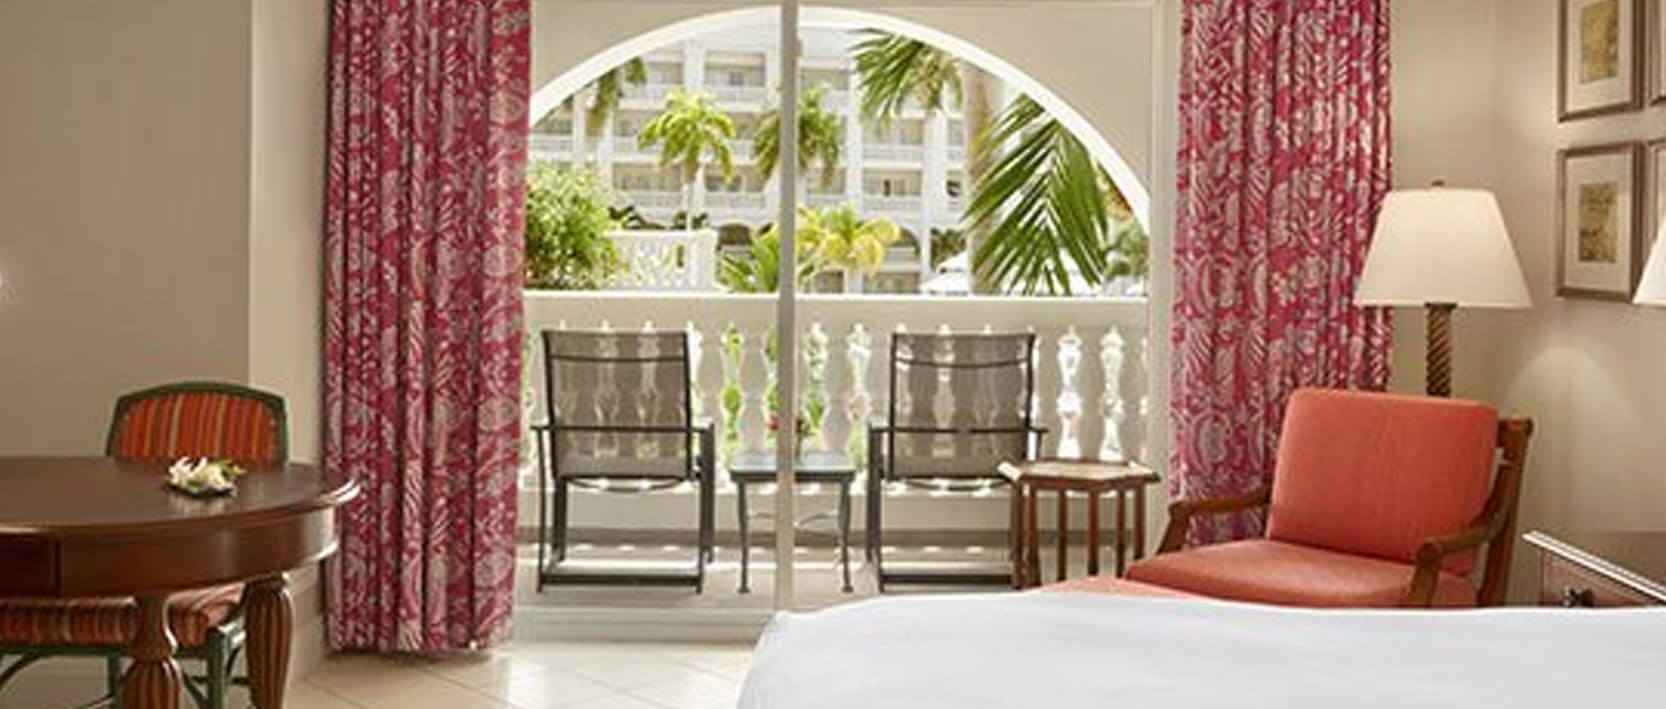 Hyatt Ziva Rose Hall Accommodations - Deluxe Resort View King or Double